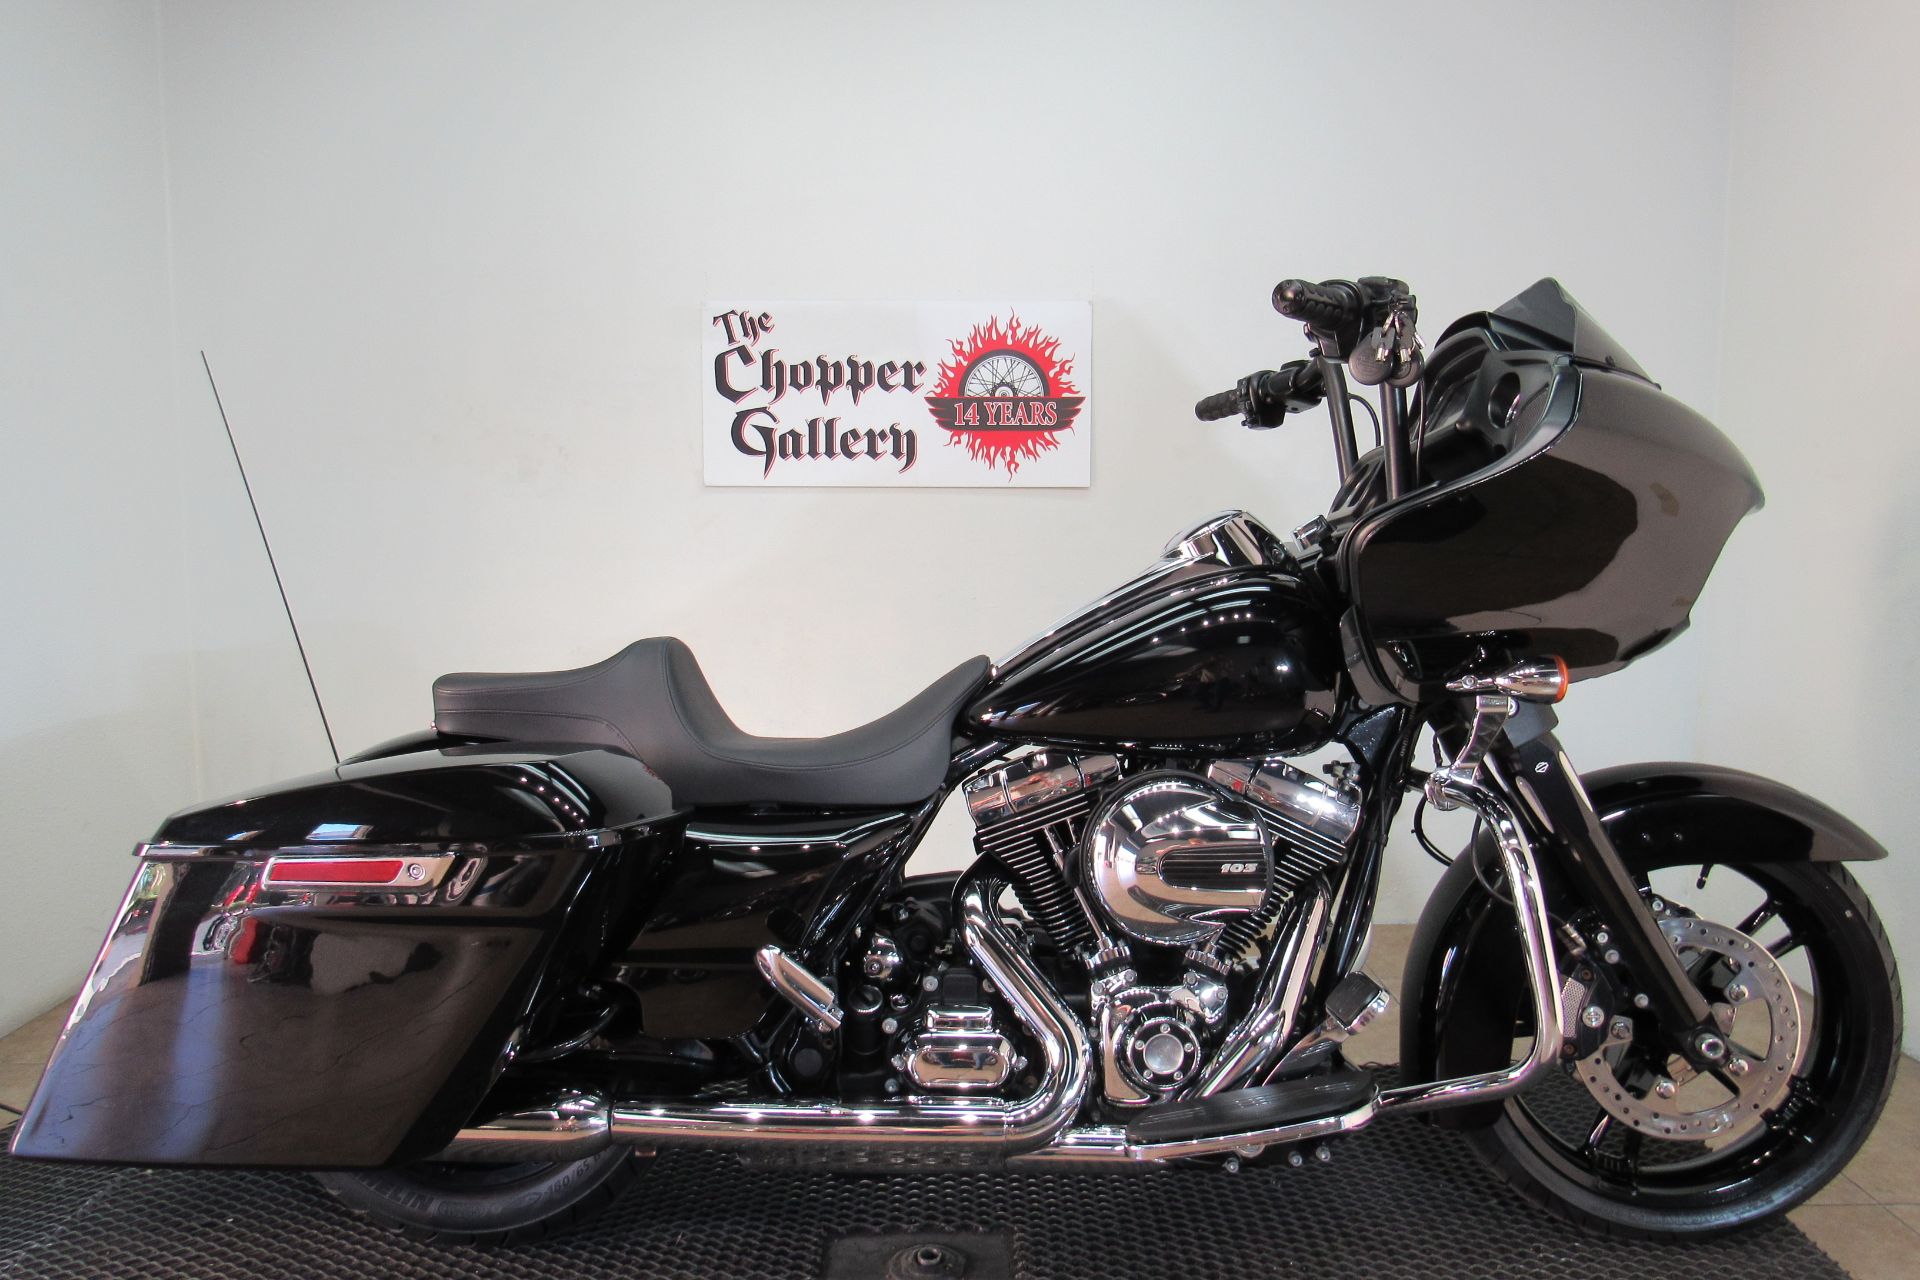 2015 Harley-Davidson Road Glide® Special in Temecula, California - Photo 1